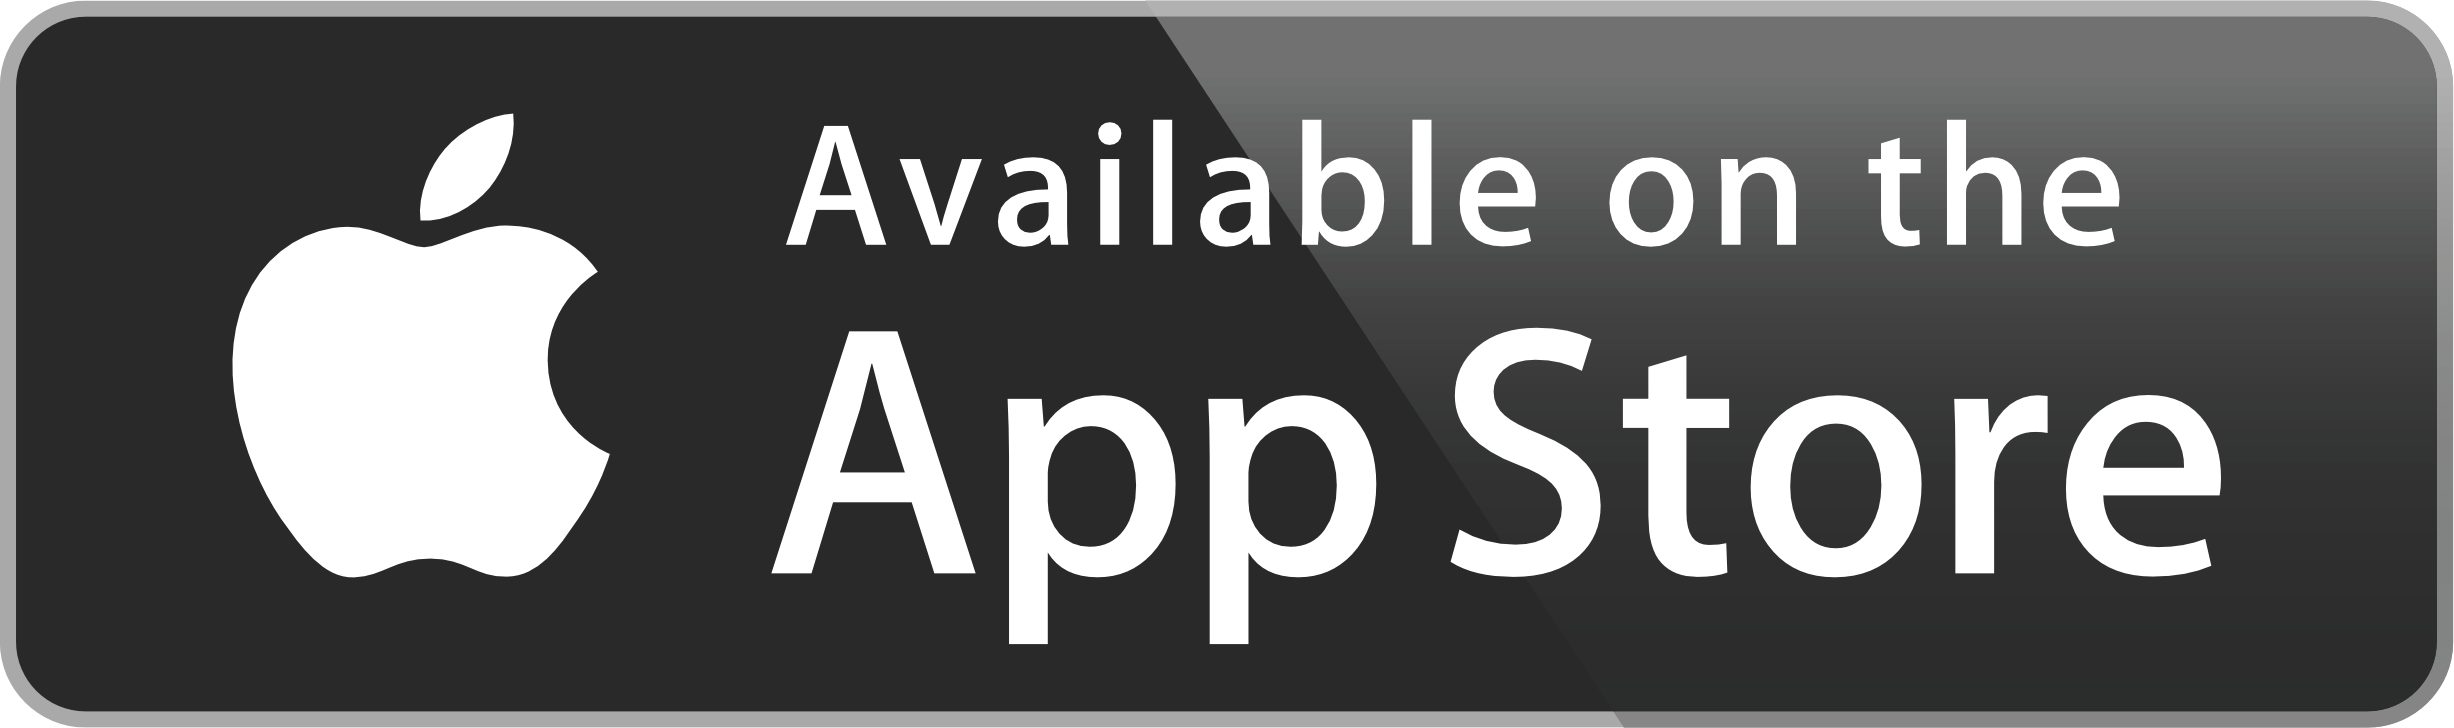 itunes app store button